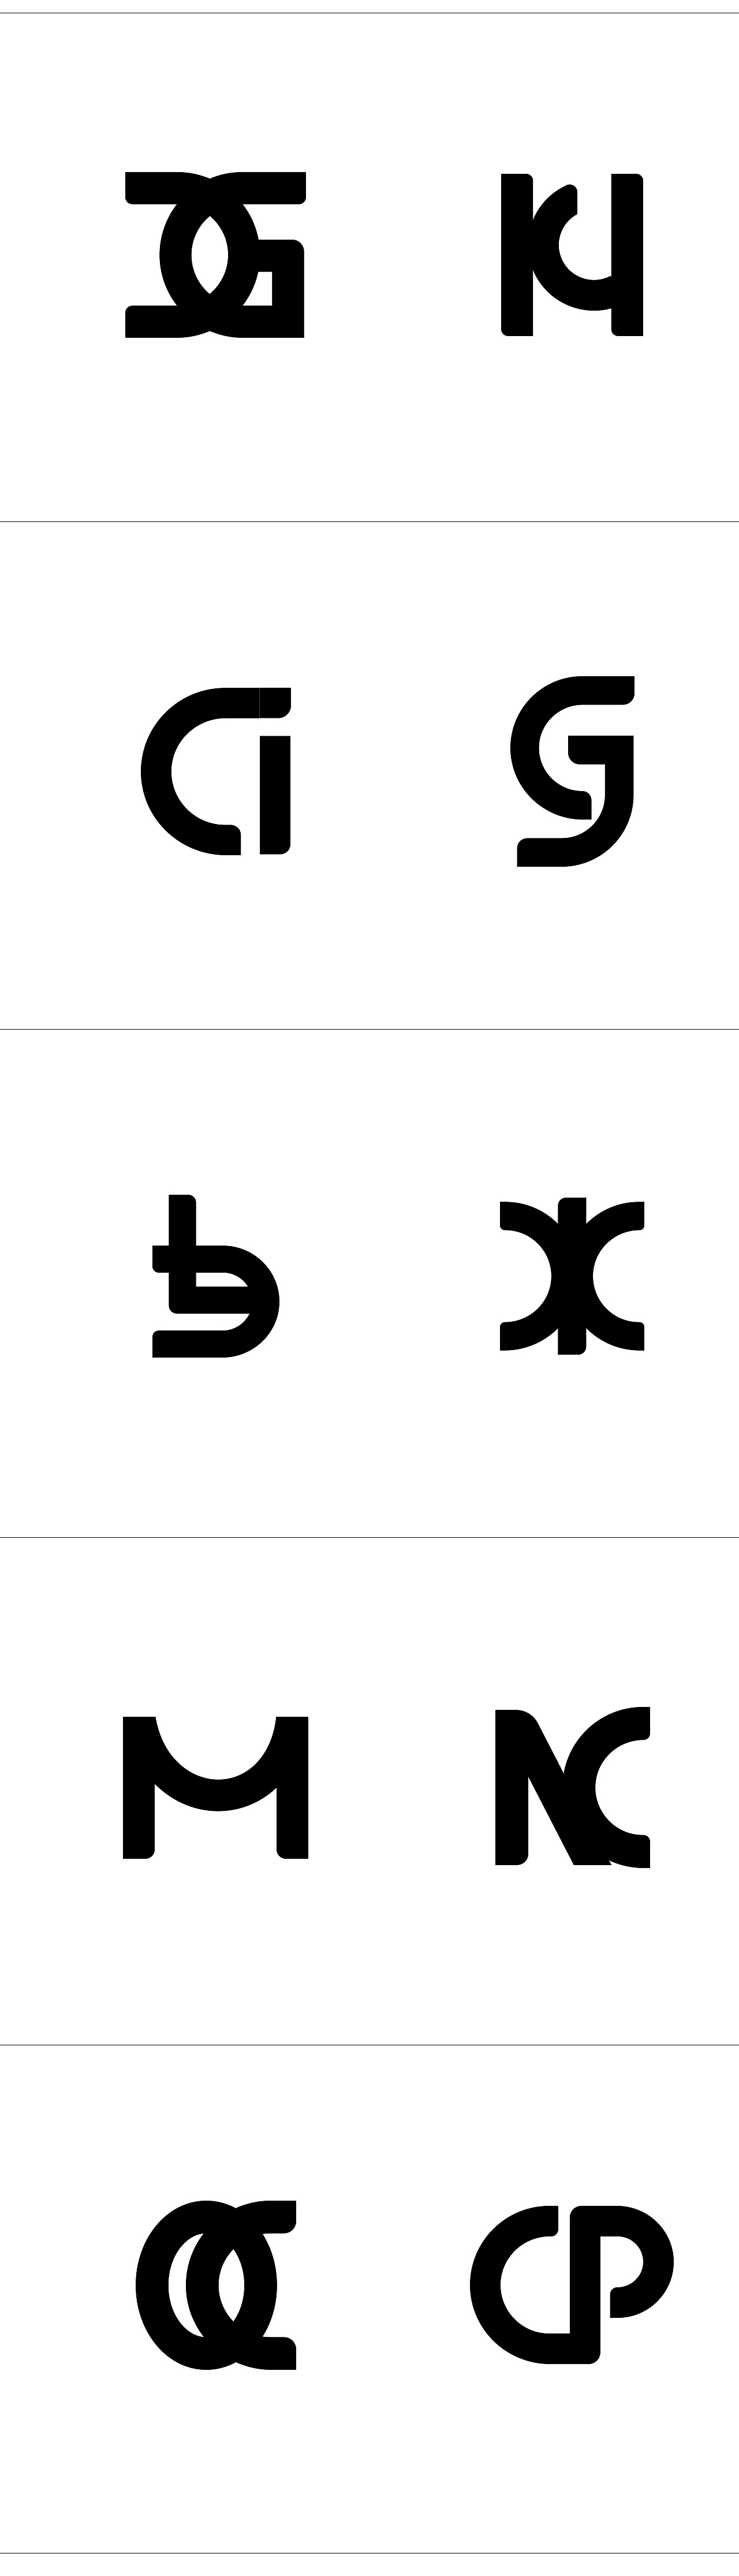 Cy字母单字符样式初始徽标模板 库存照片. 图片 包括有 设计, 急性, 概念, 要素, 总公司, 象征 - 220281684